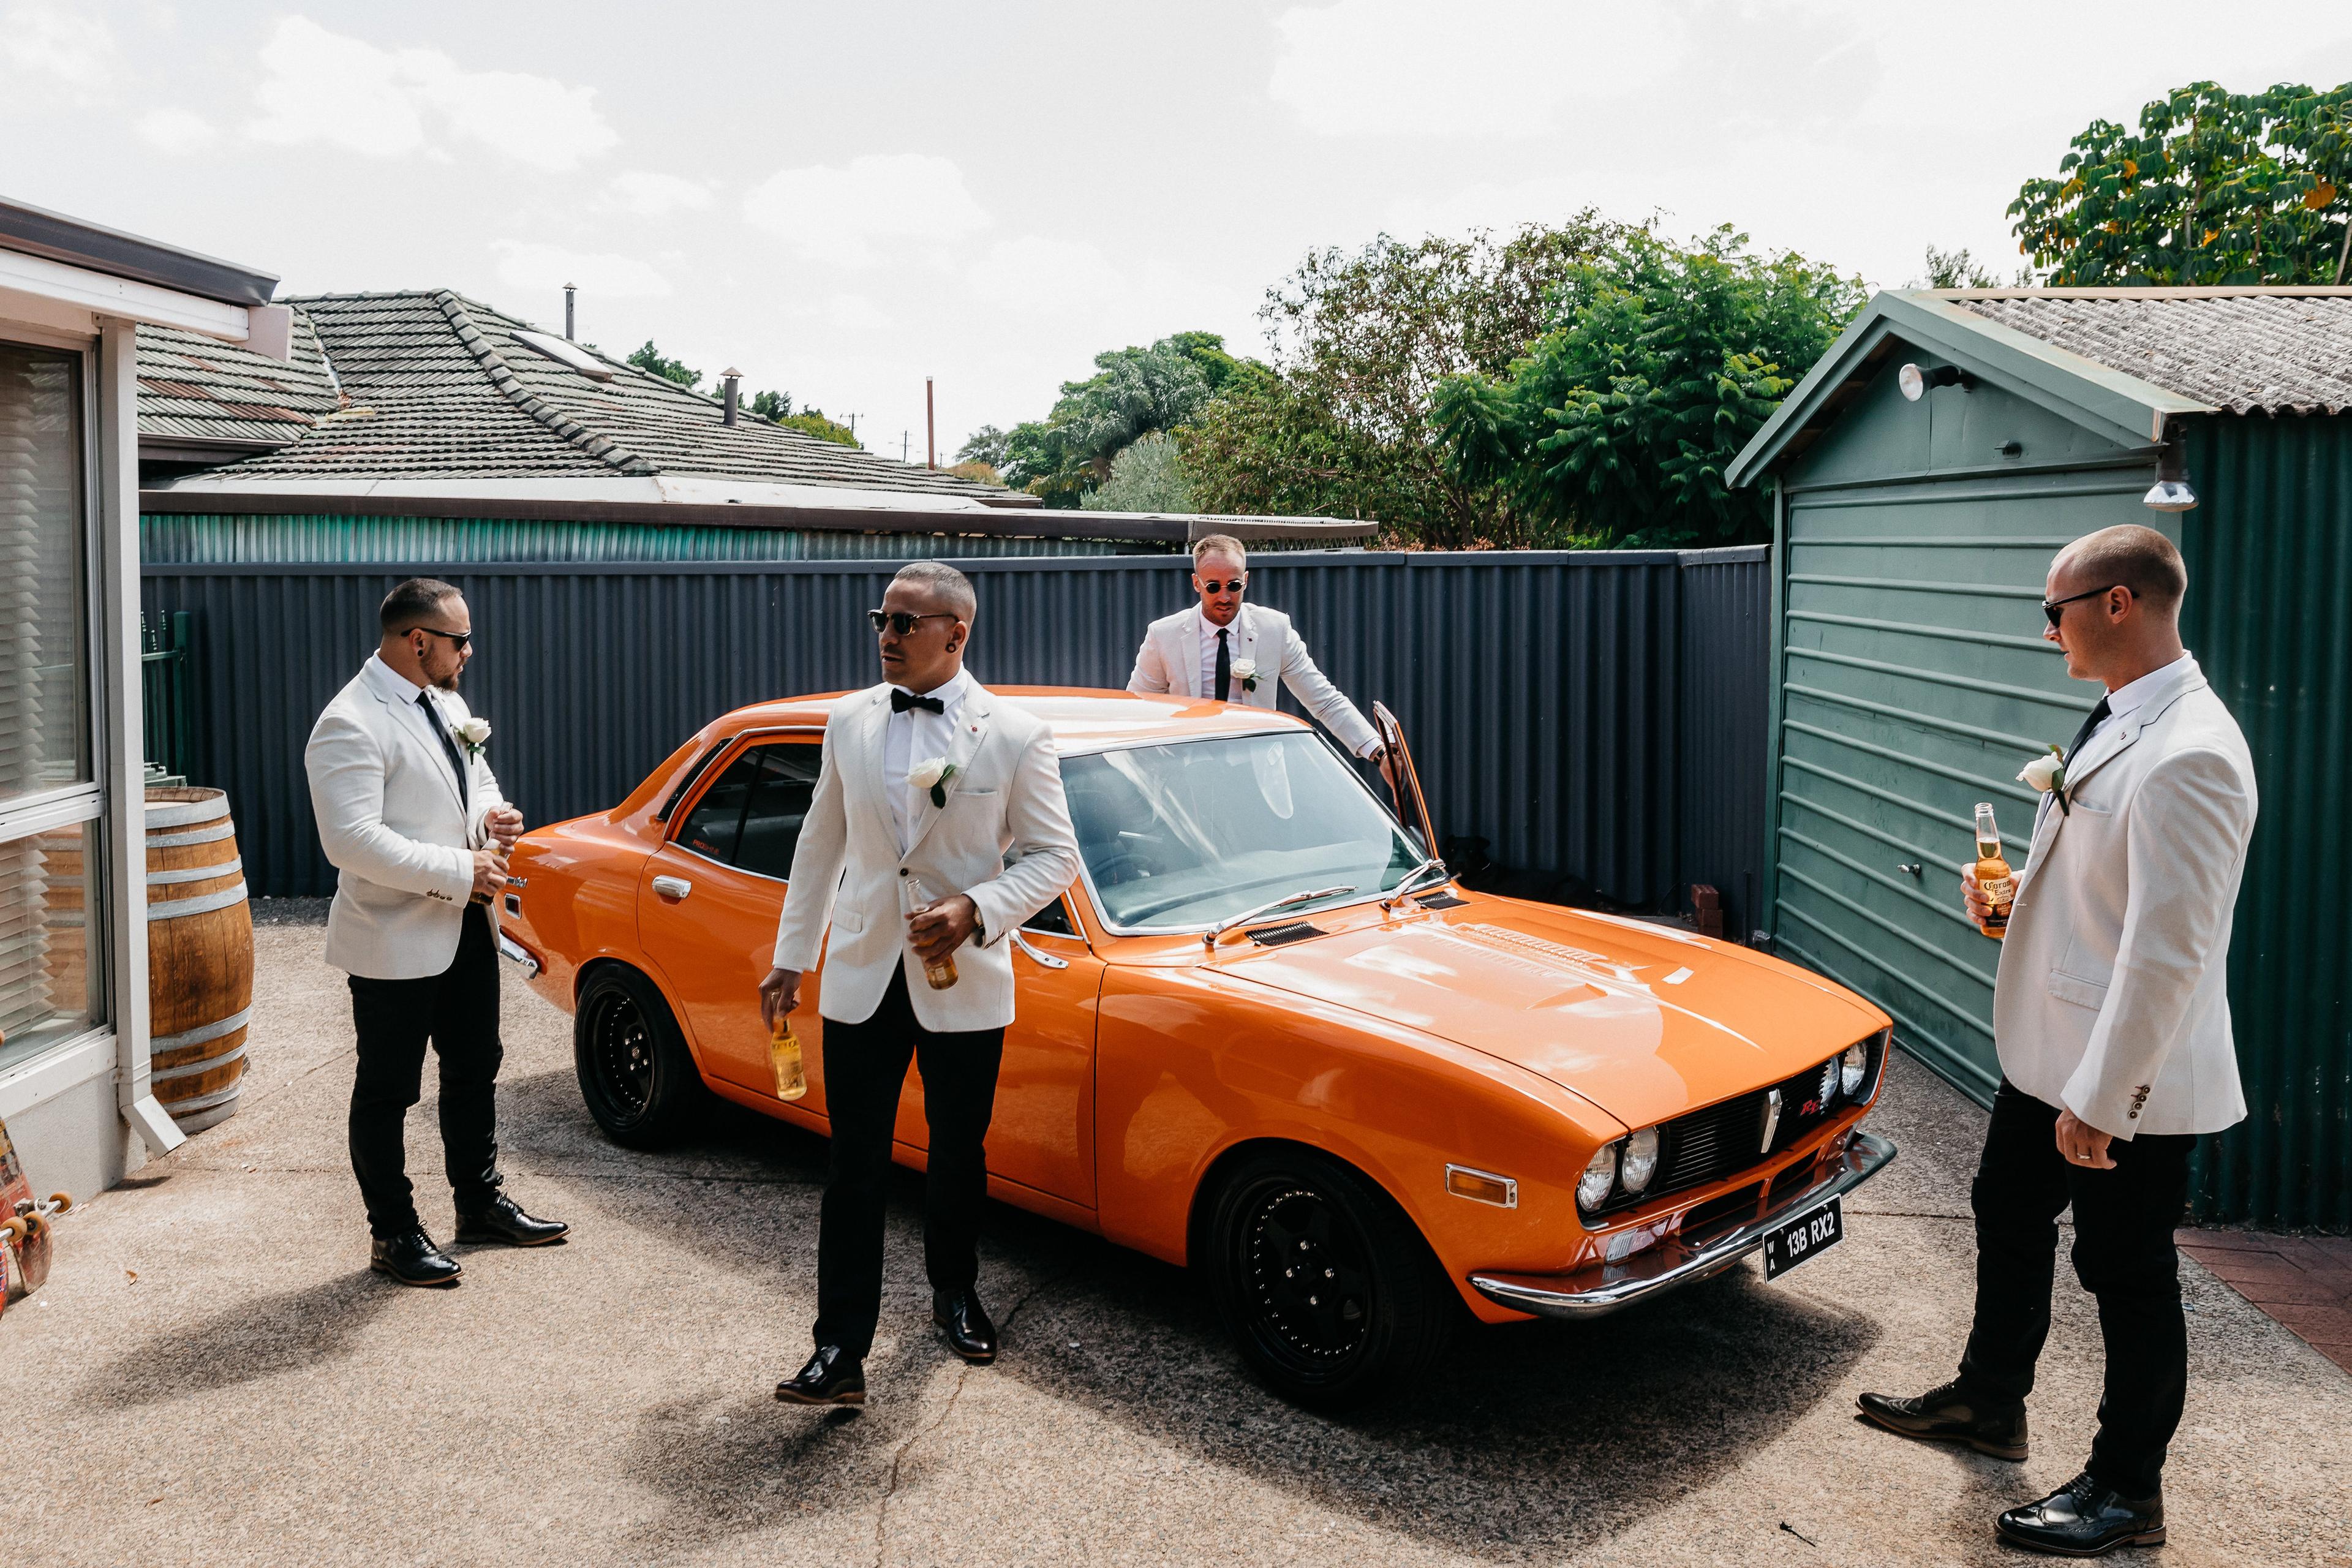 City wedding in Perth featuring groomsmen